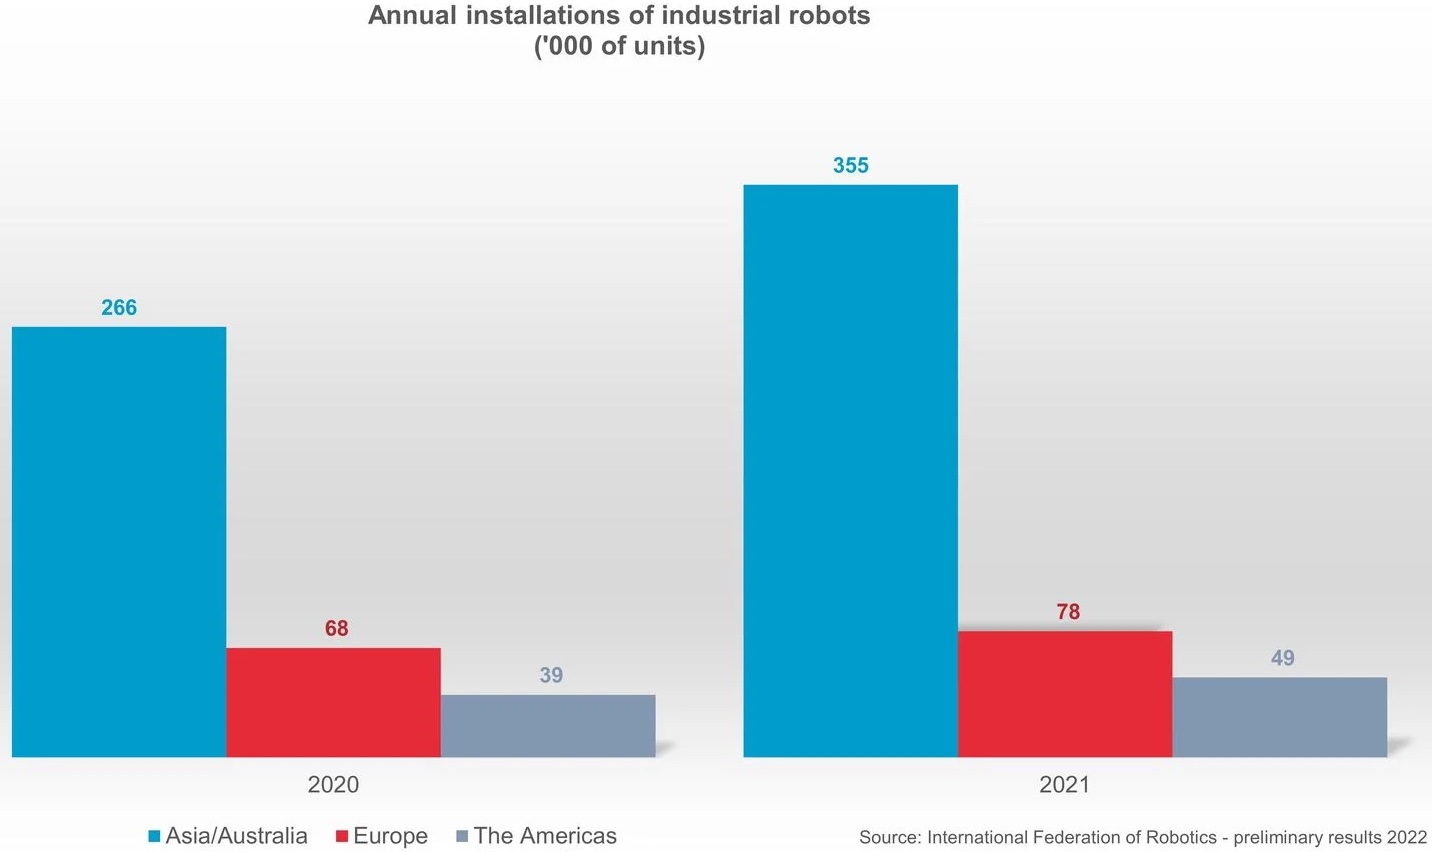 Industrial robot installations in 2021